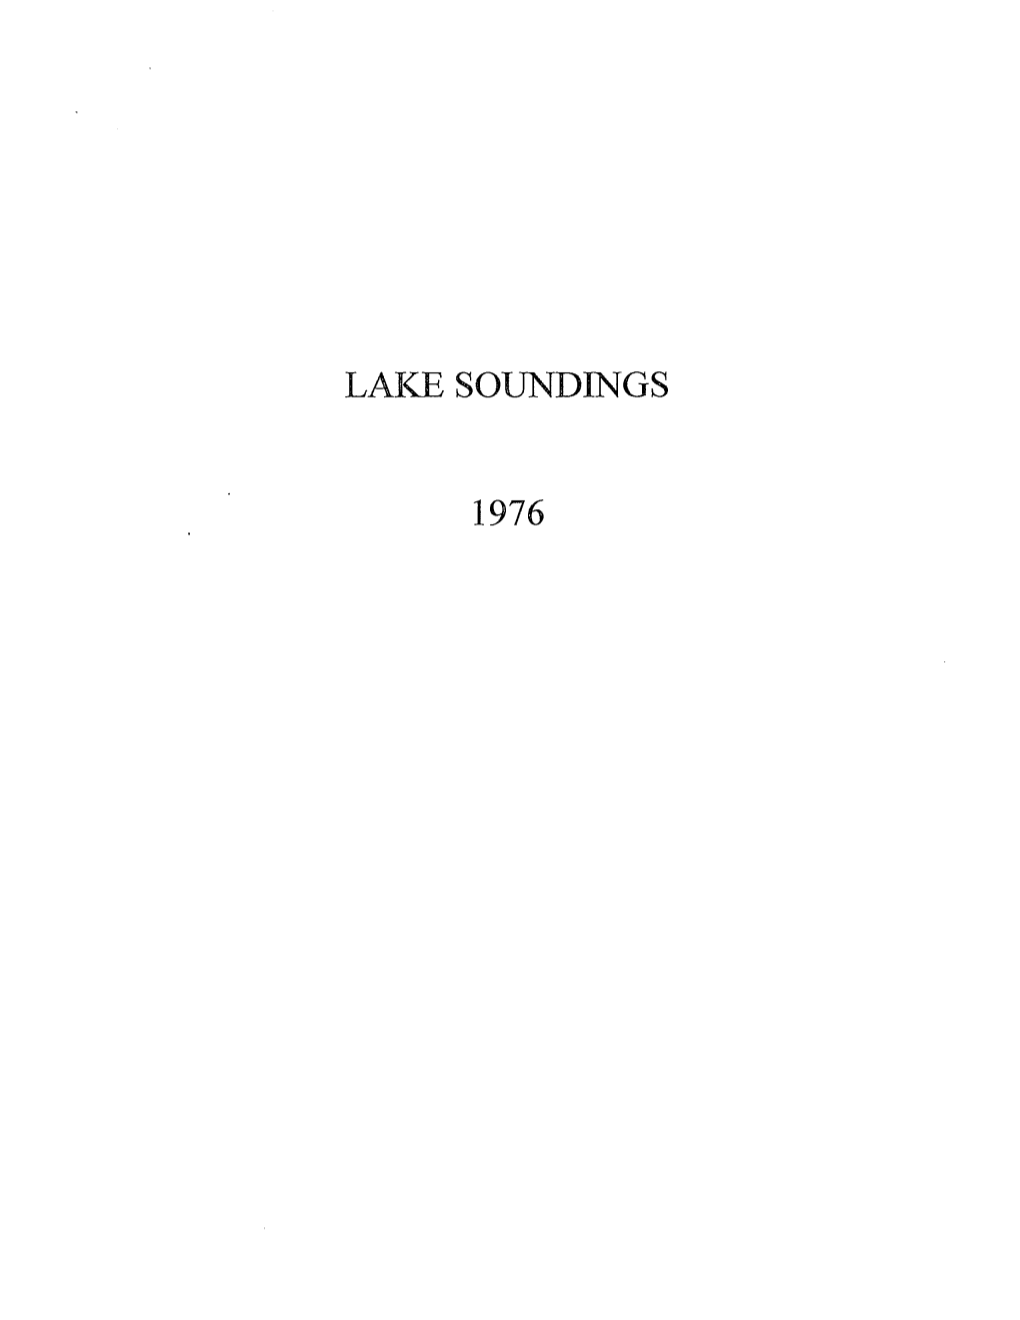 Lake Soundings 1976